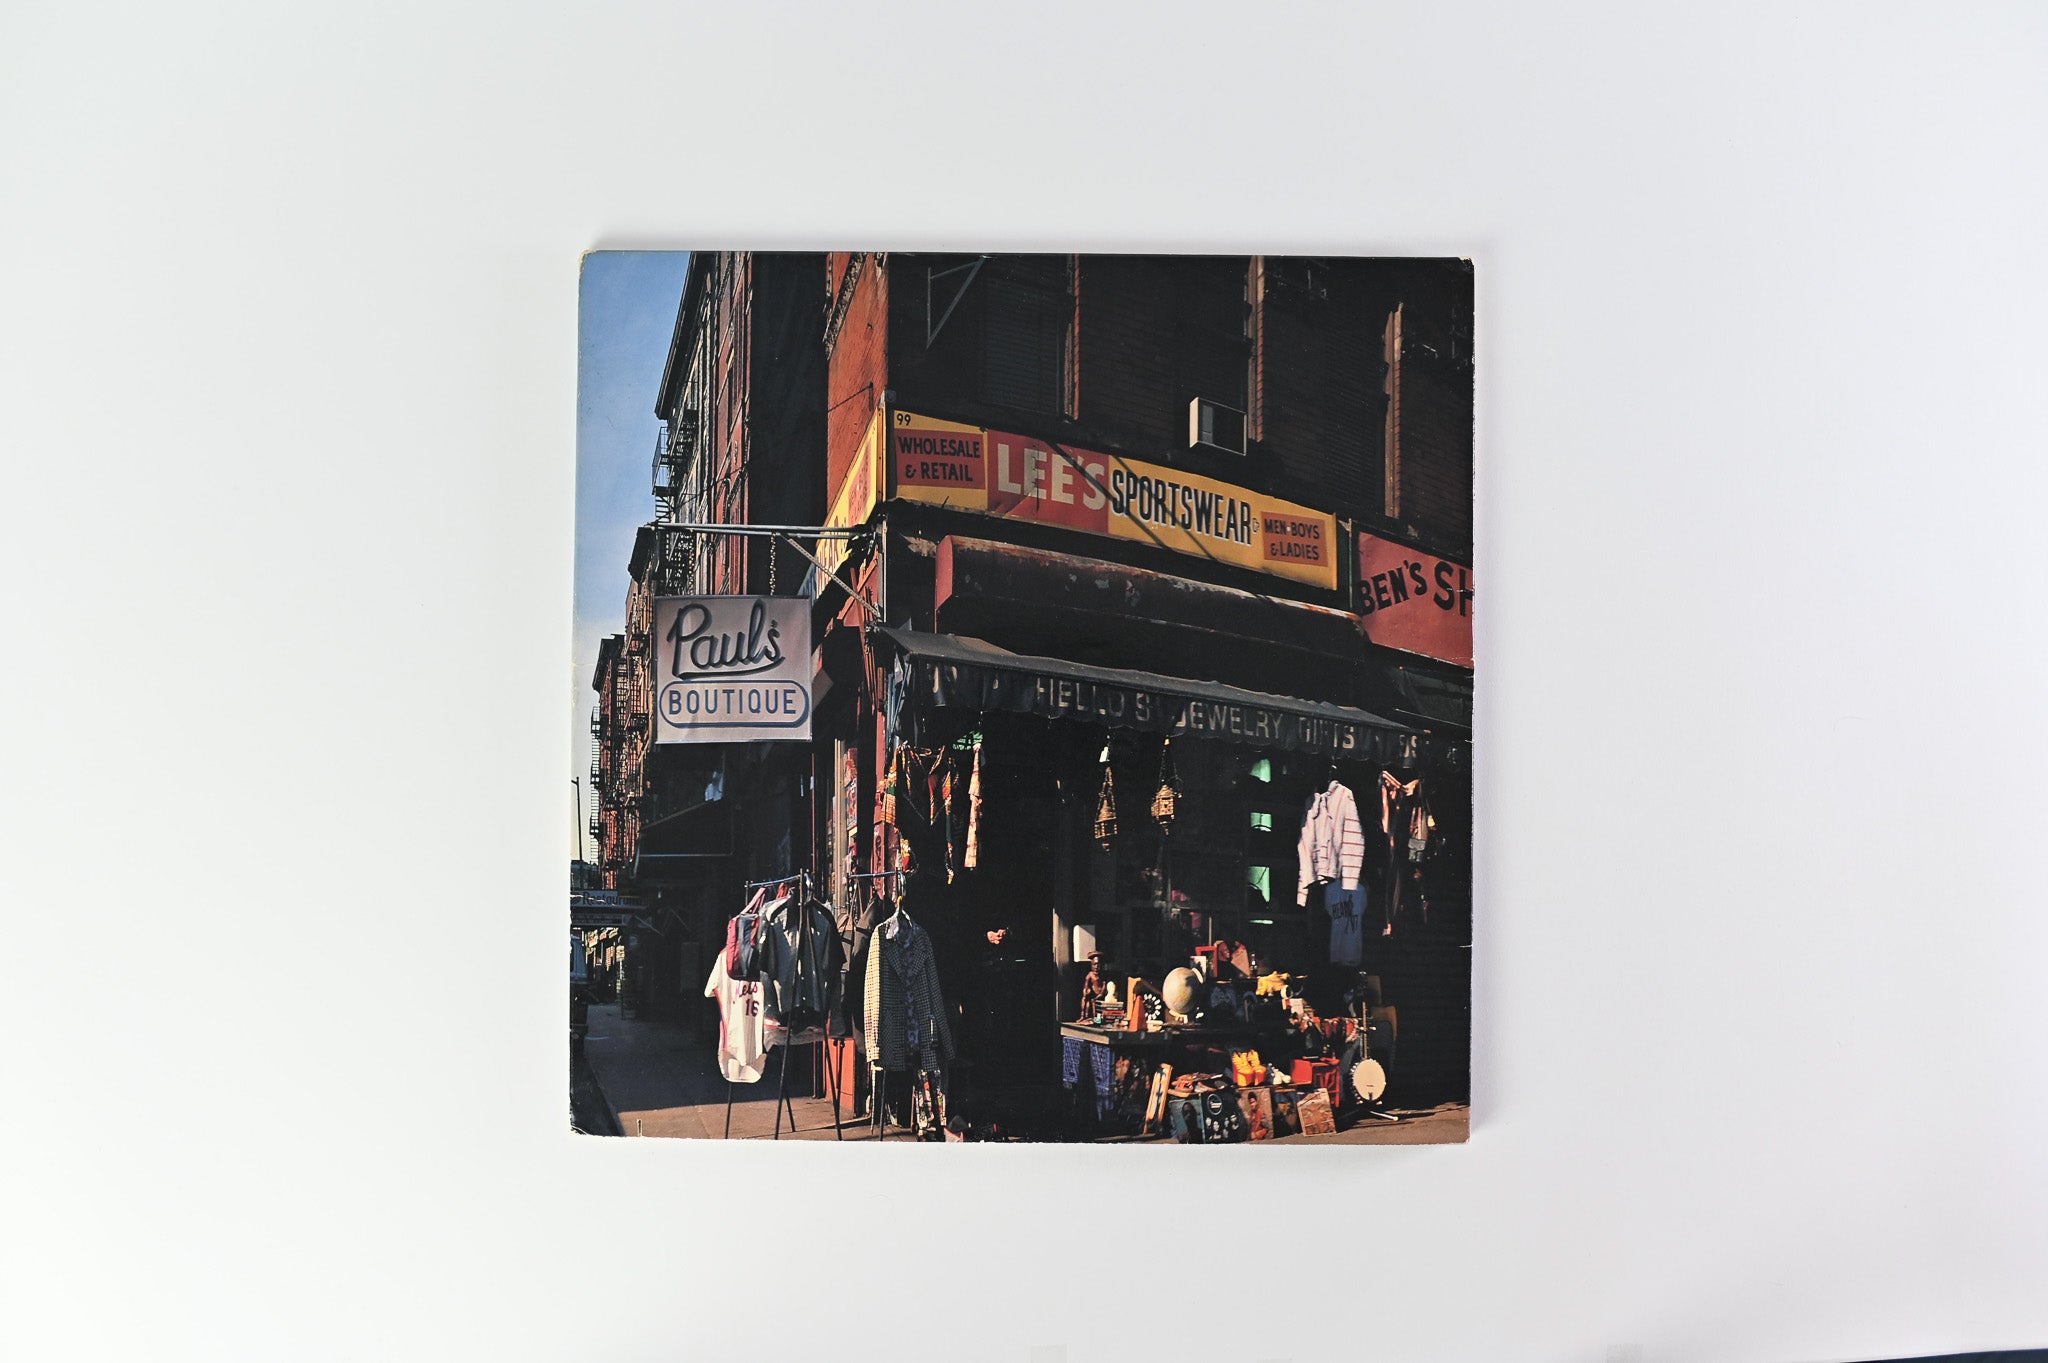 Beastie Boys - Paul's Boutique on Capitol Ltd Deluxe 8-Panel Jacket